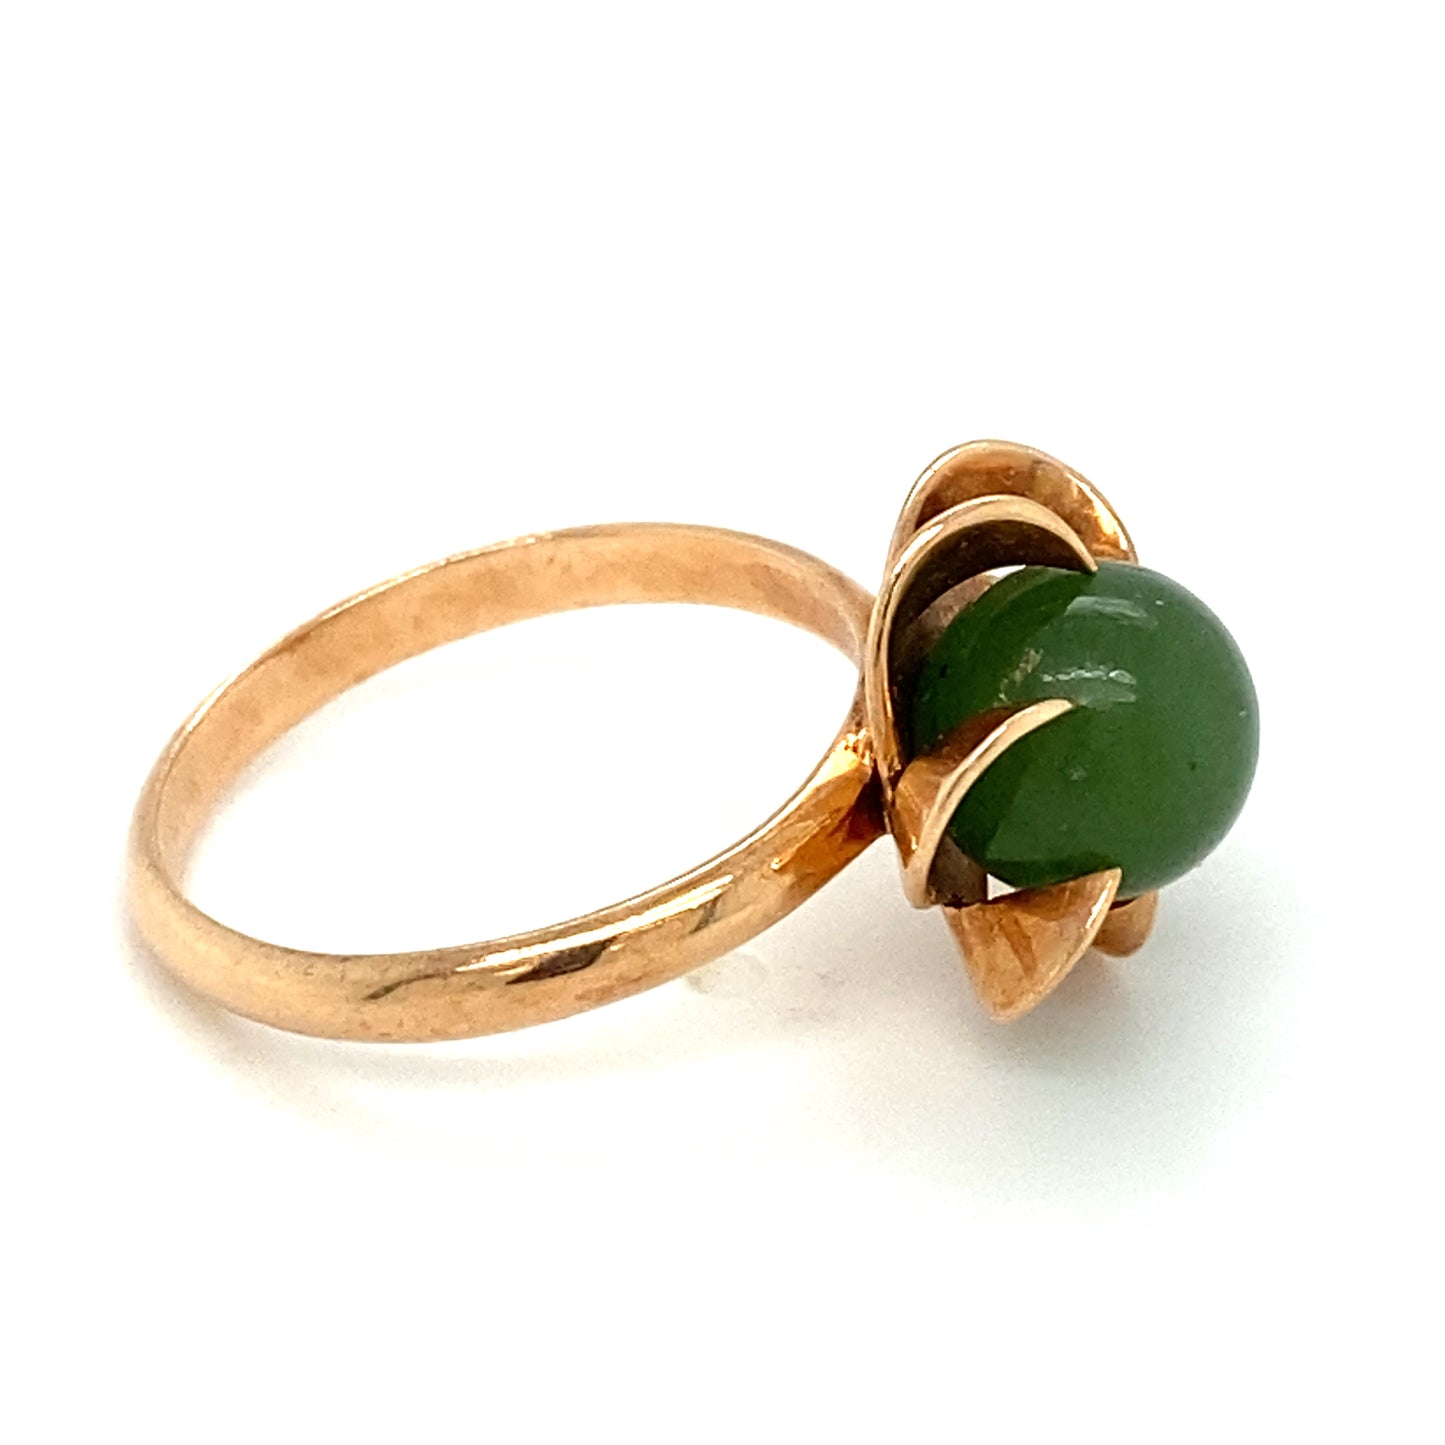 Circa 1950s Green Jade Flower Ring in 18K Gold